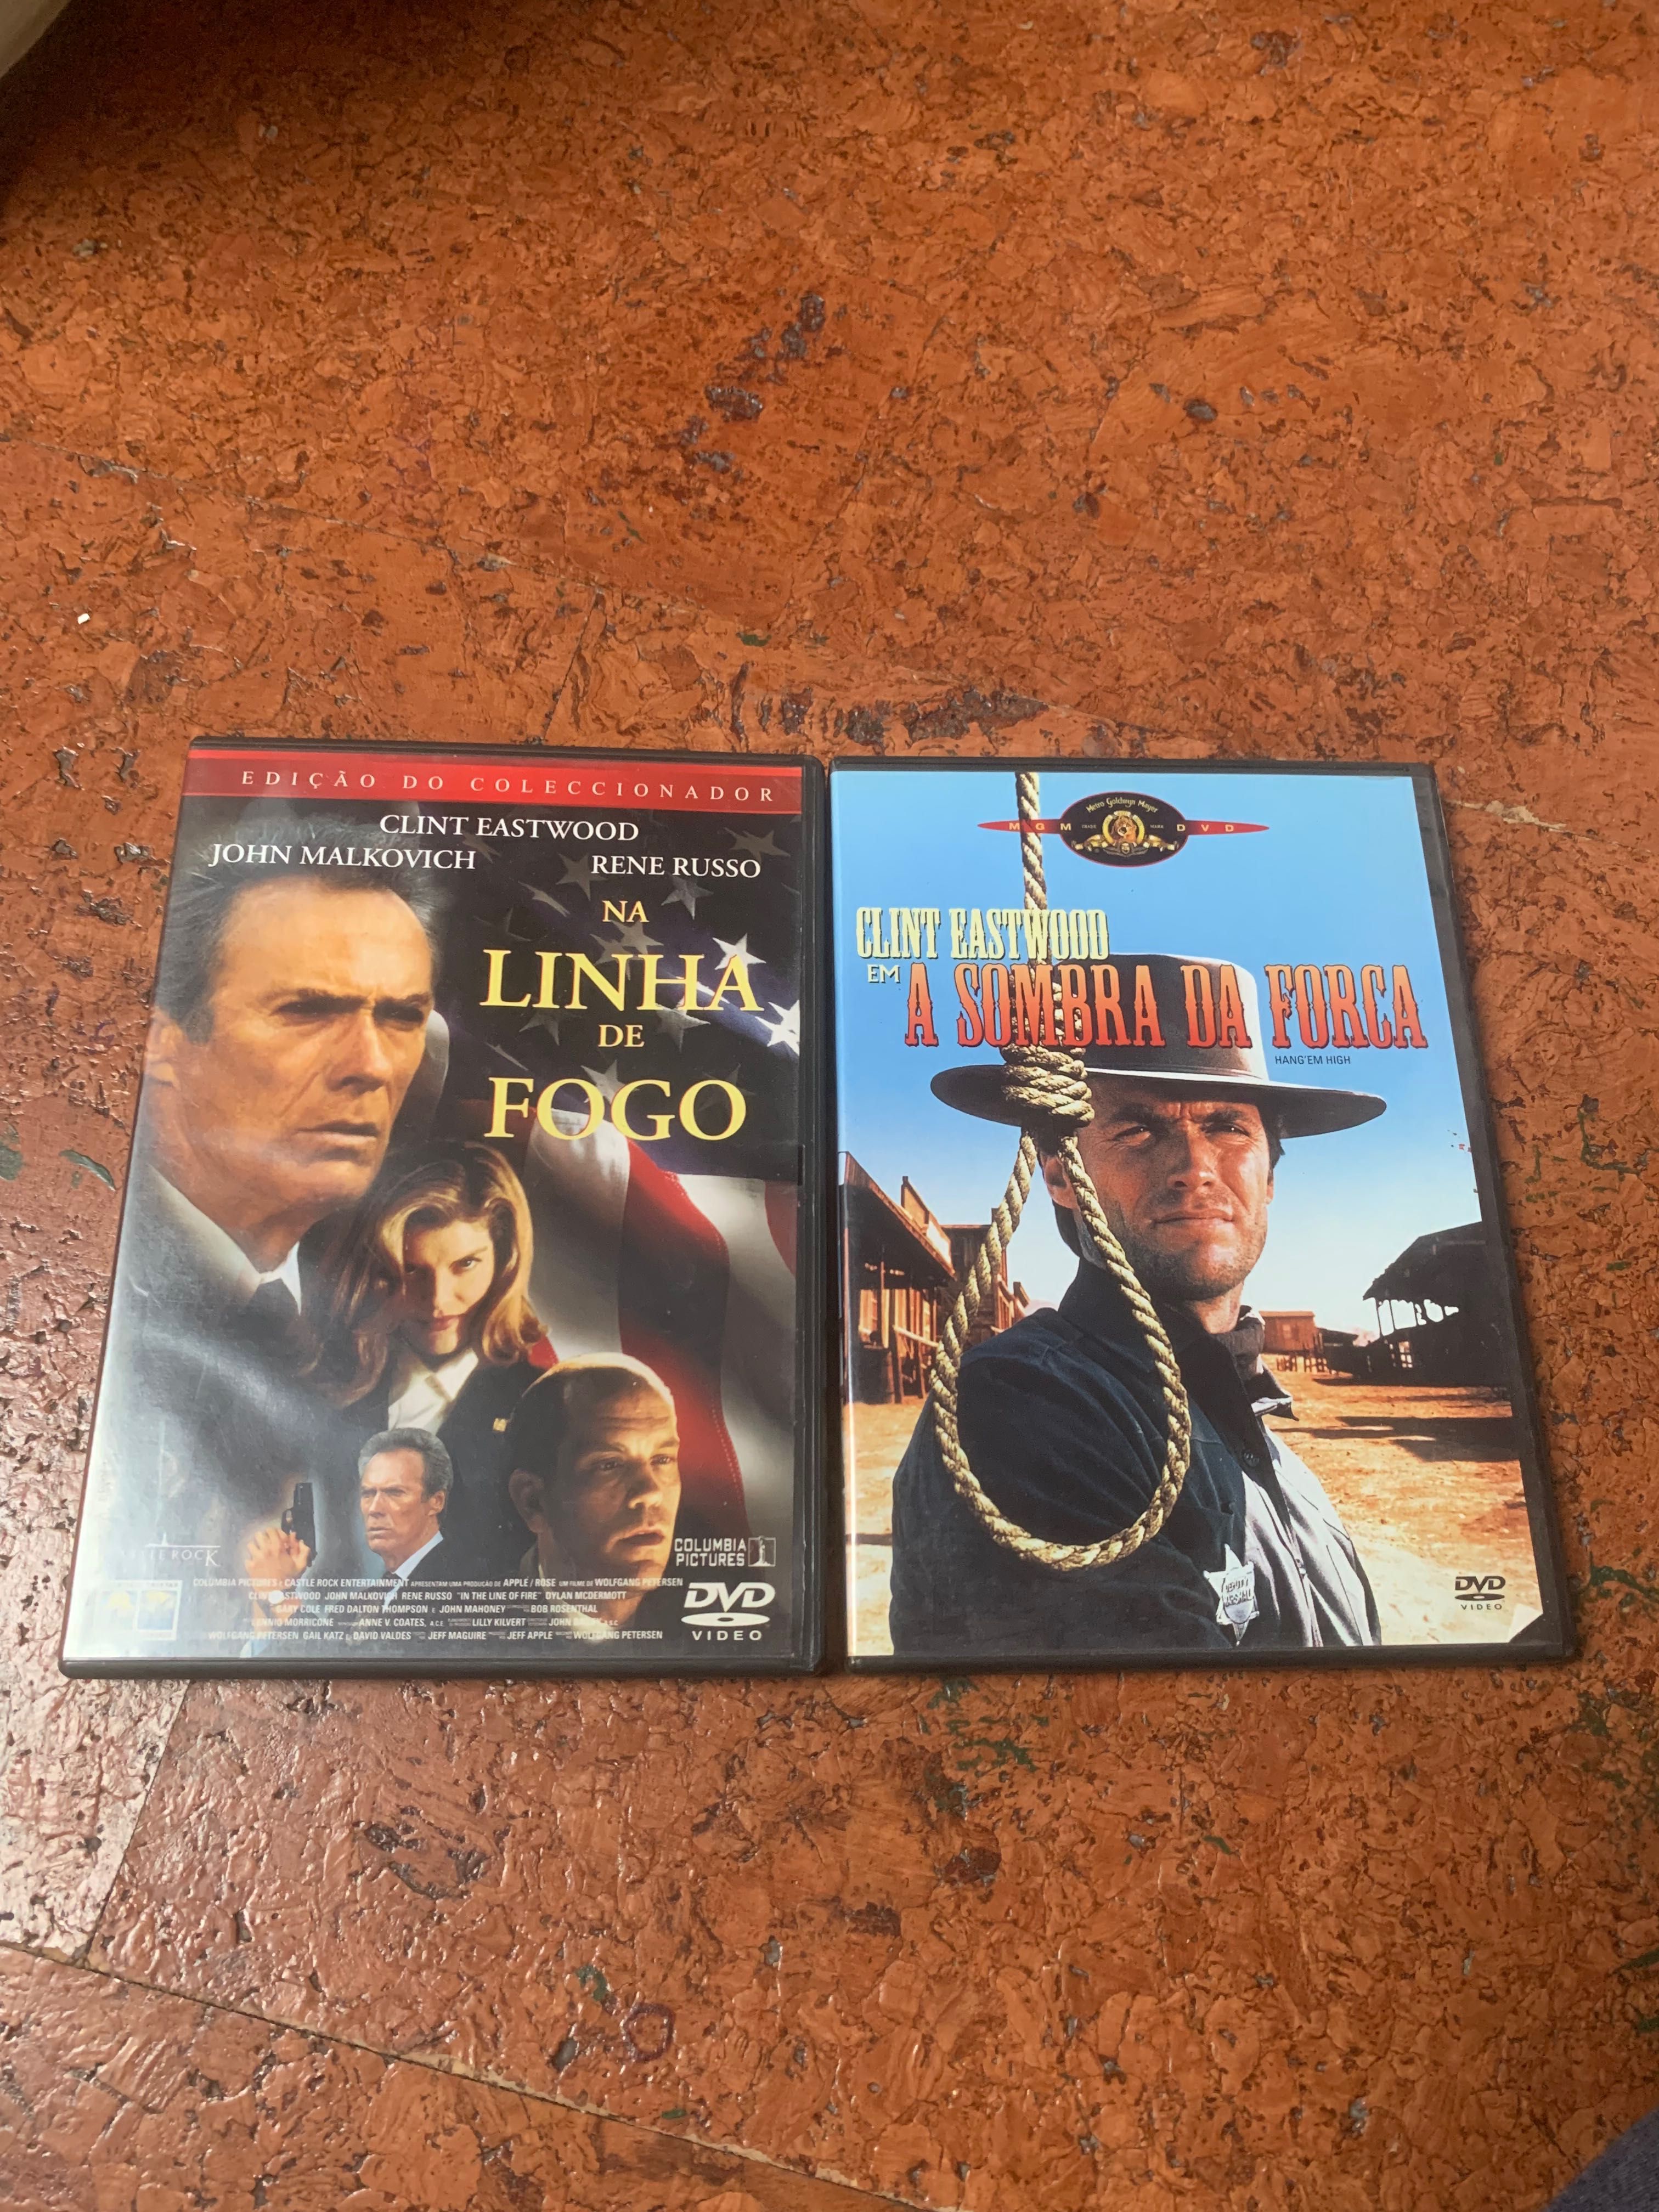 DVD Sean connery e cliente Eastwood